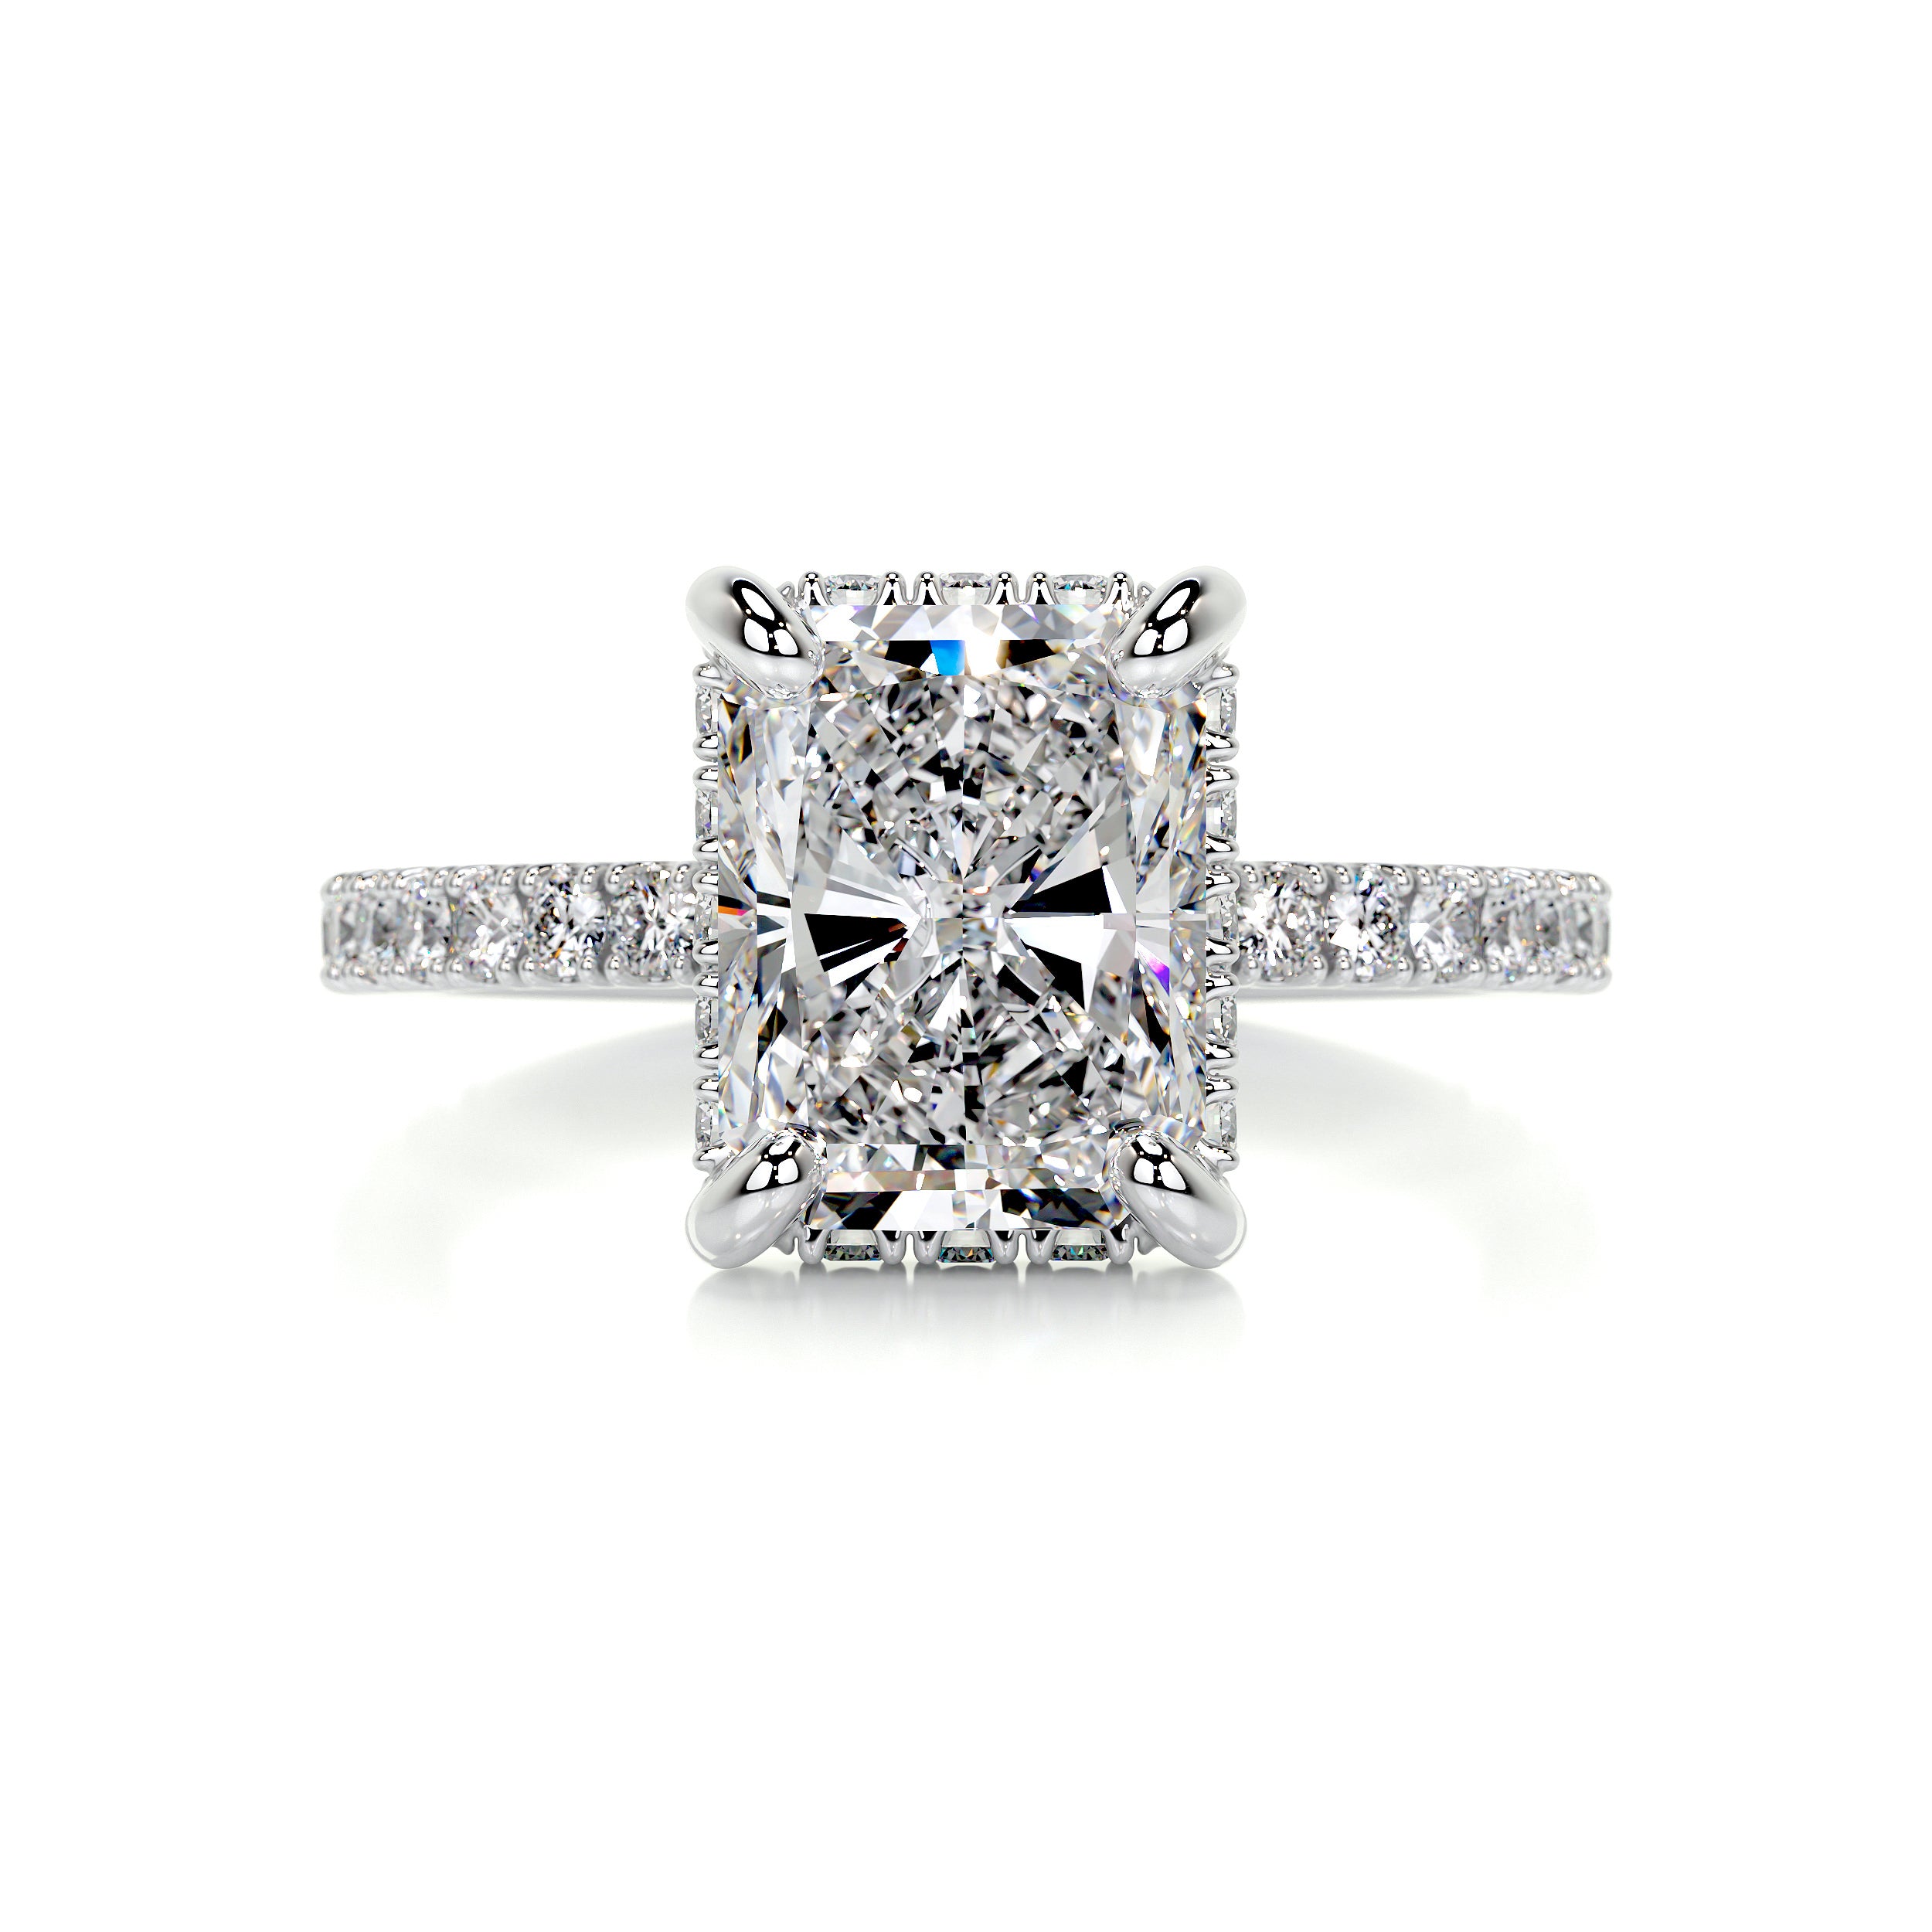 Engagement Rings For Women #bridalrings  Round diamond engagement rings,  Womens engagement rings, Beautiful wedding rings